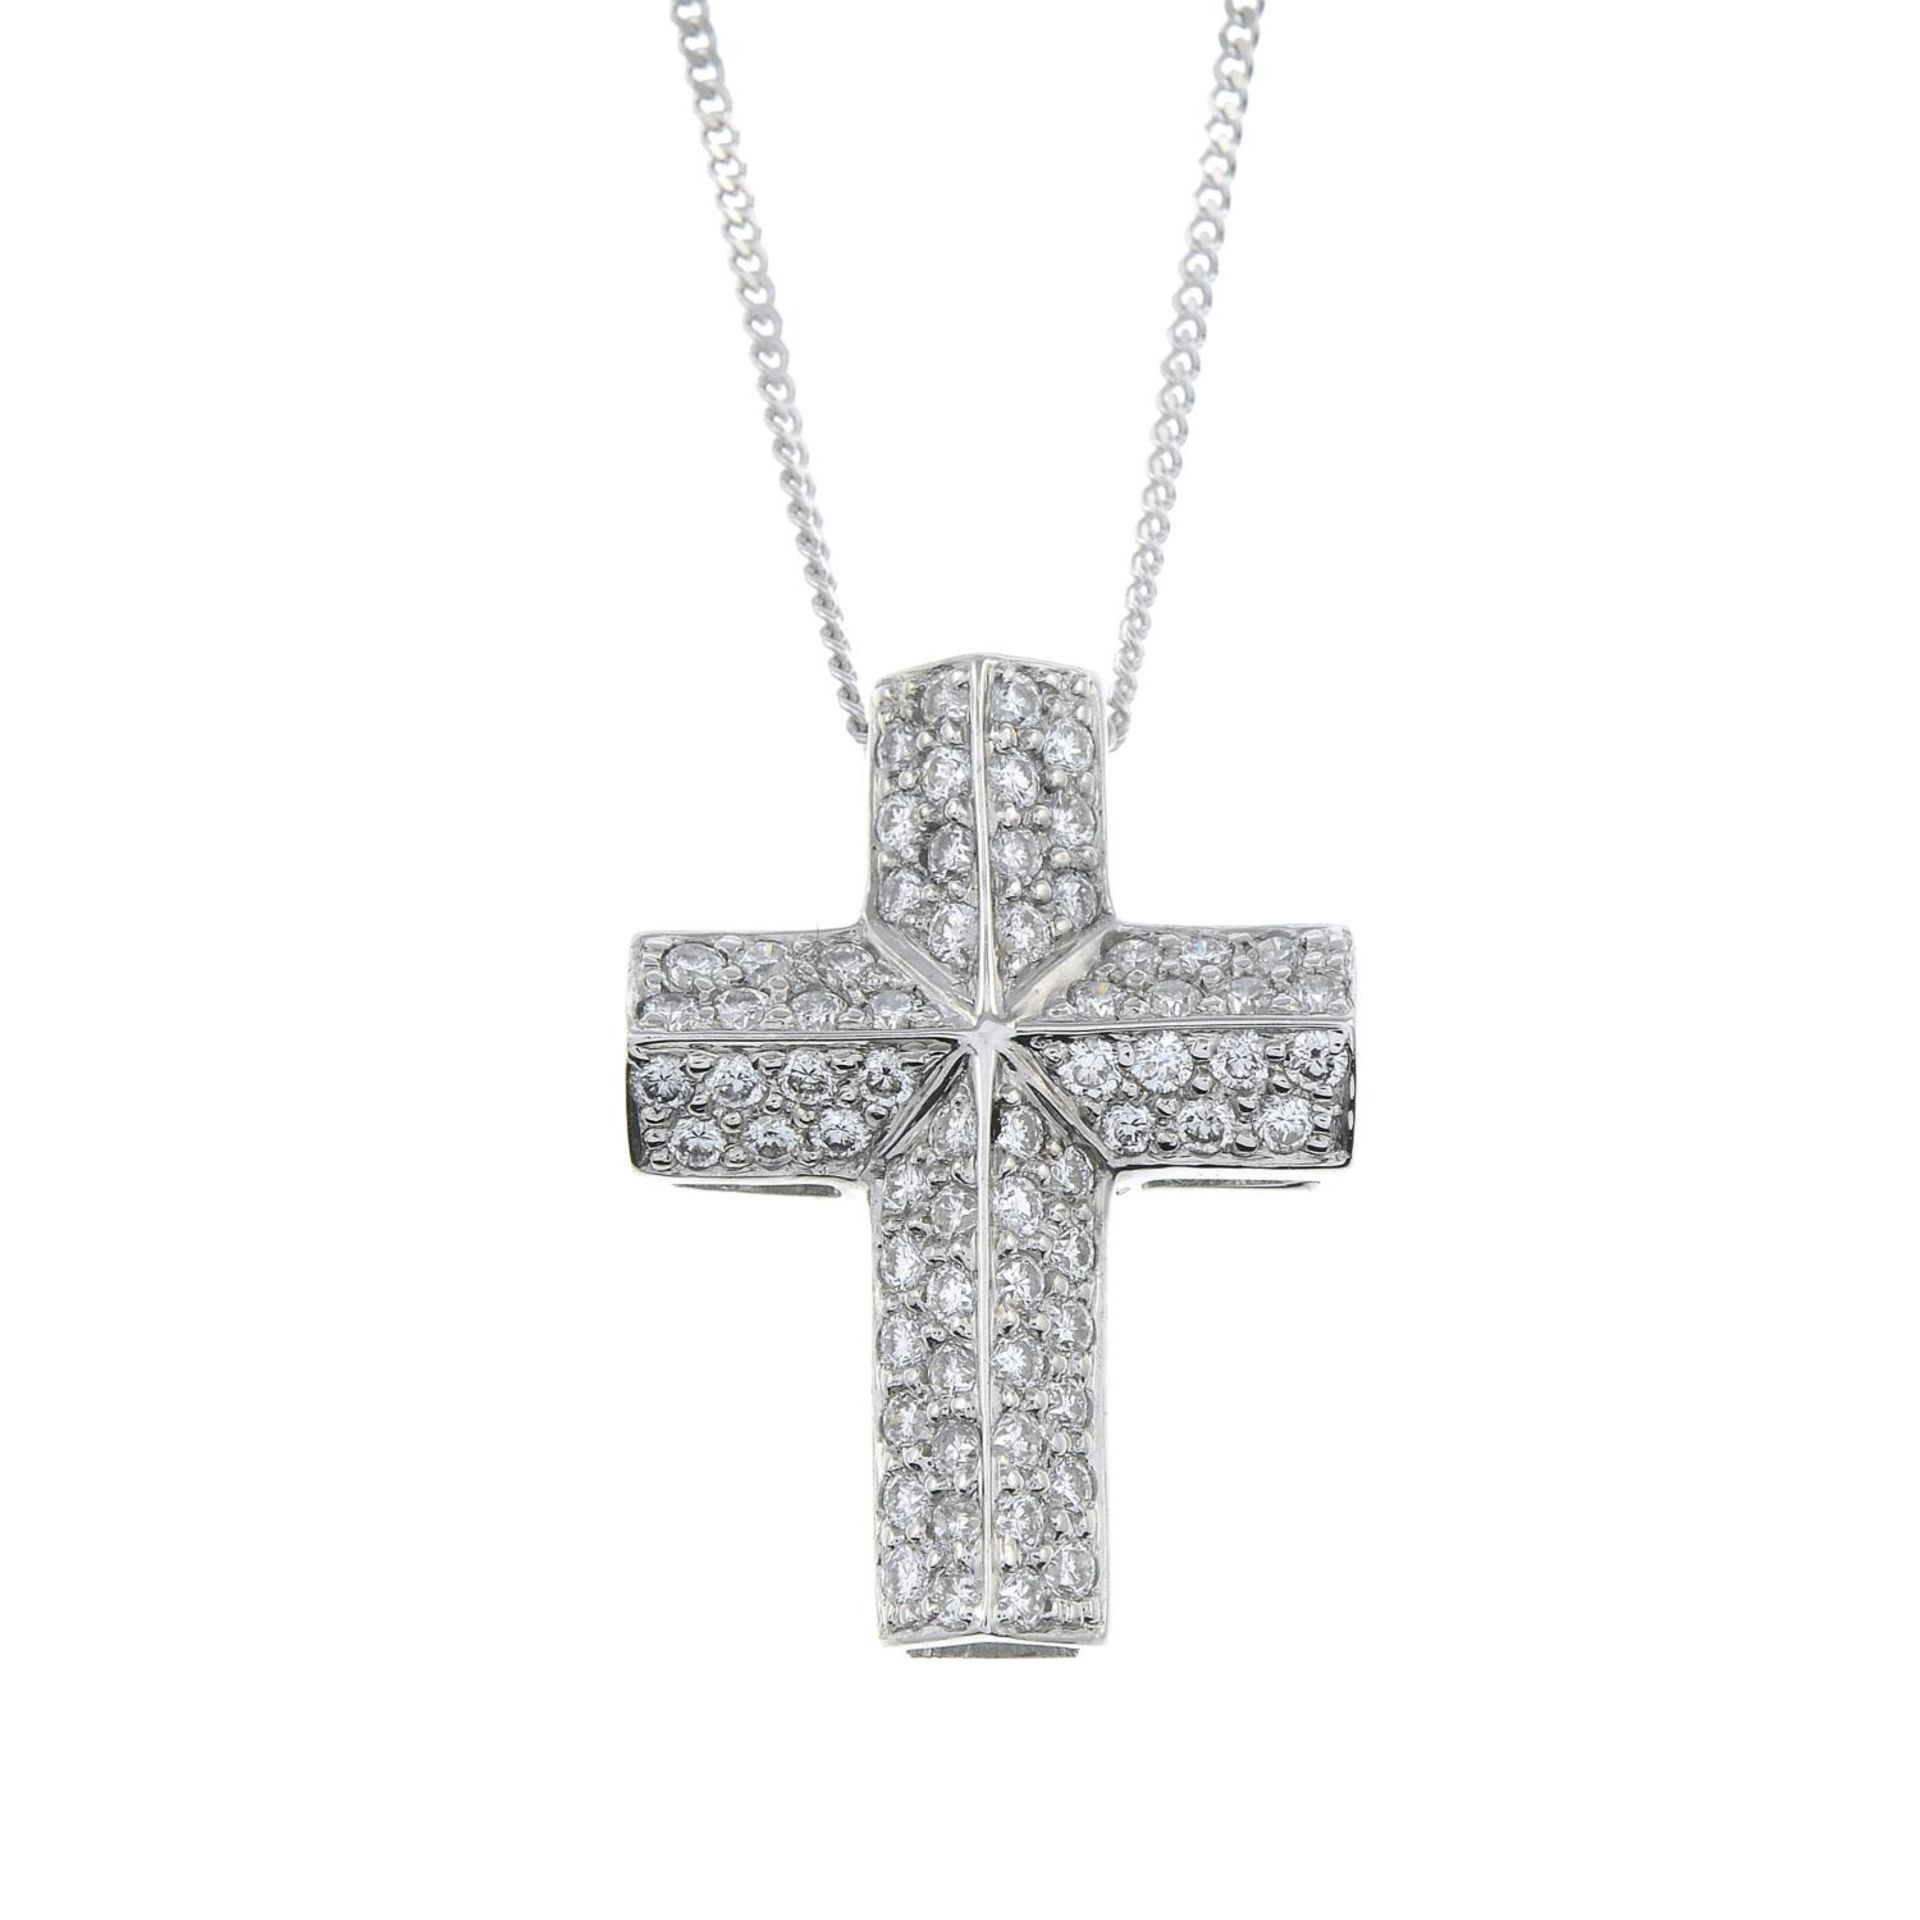 A brilliant-cut diamond cross pendant, with 9ct gold chain.